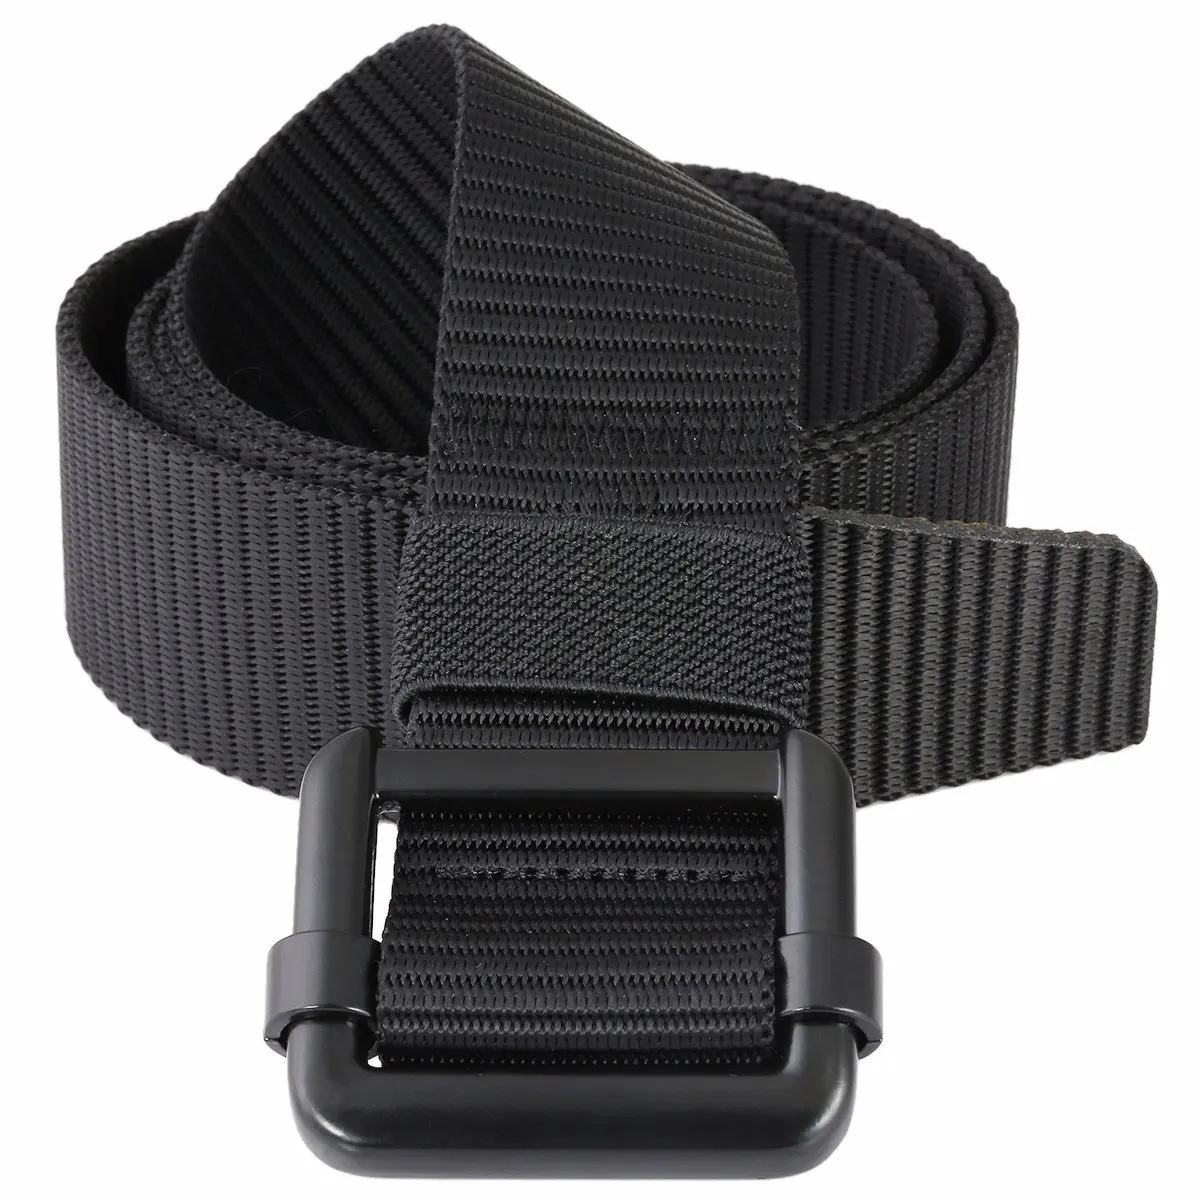 squaregarden Nylon Web Belts for Men,Military Style Tactical Duty Belts ...